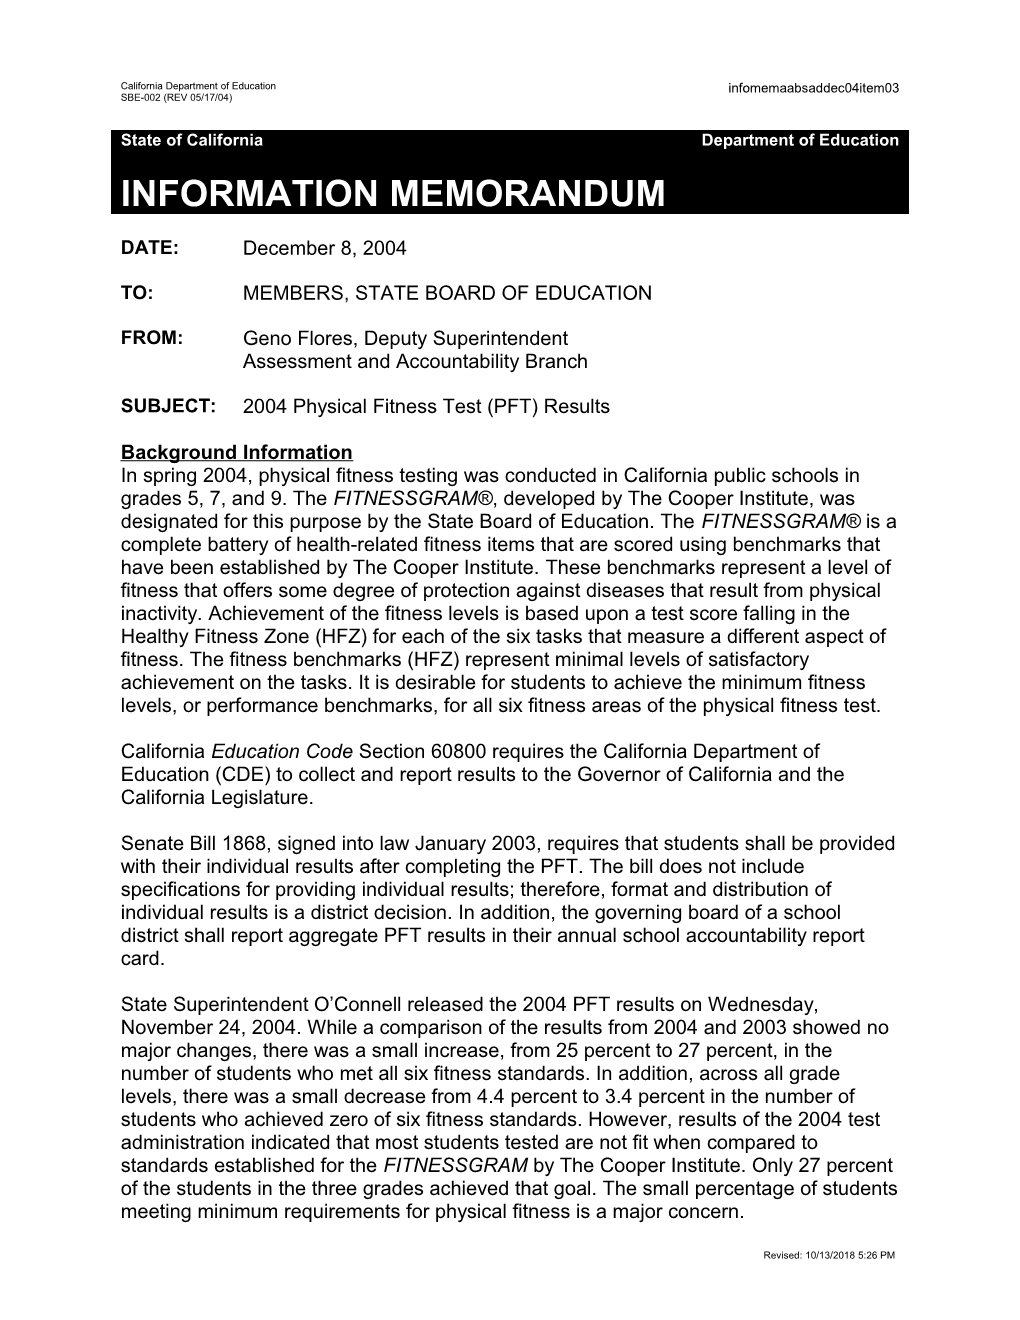 December 2004 SAD Item 3 - Information Memorandum (CA State Board of Education)